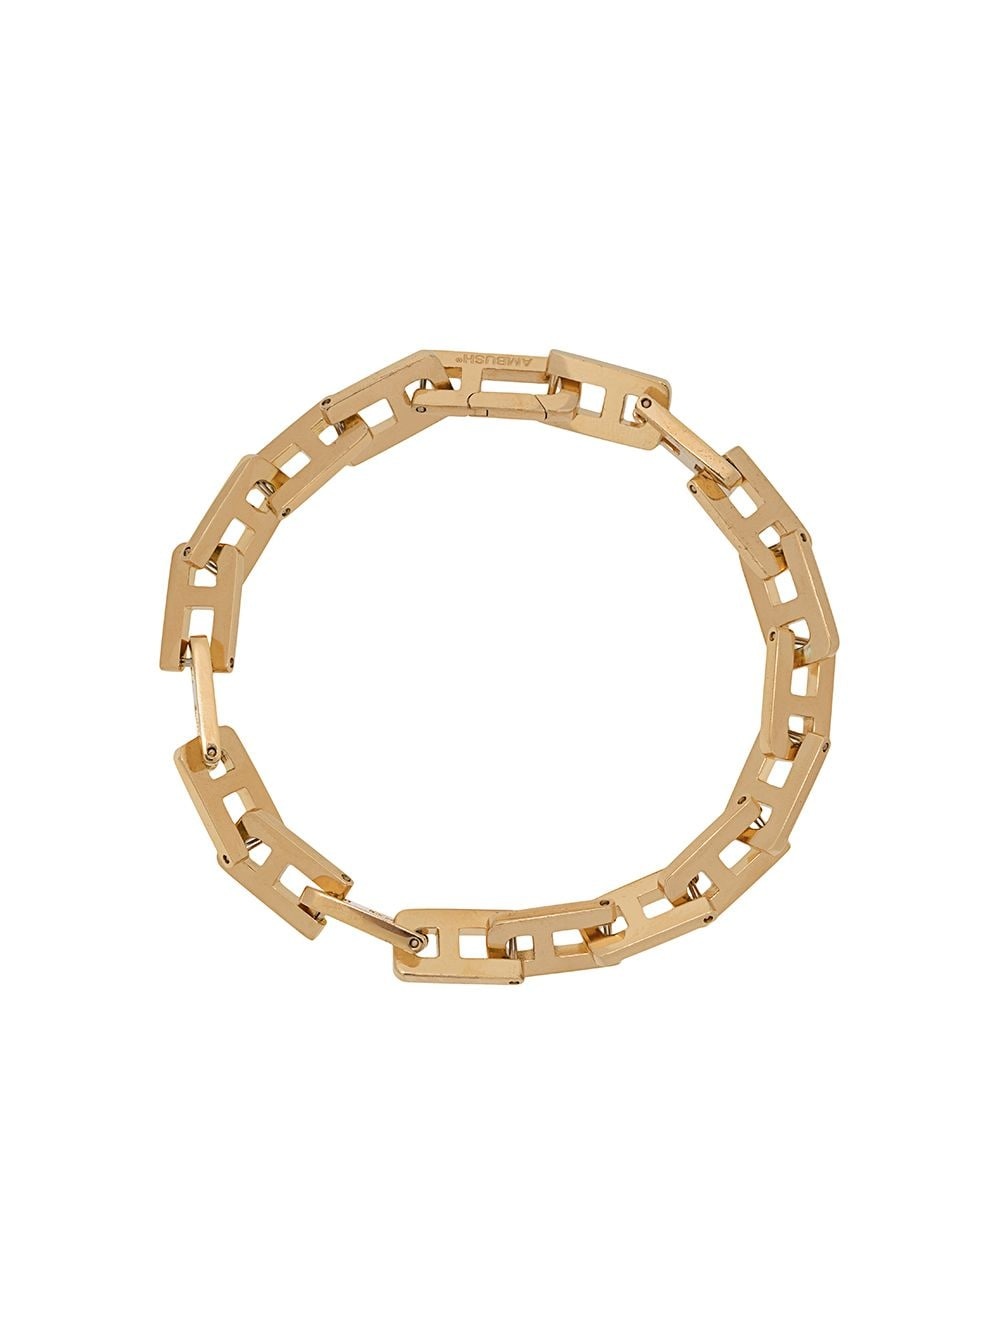 chain-link bracelet - 1